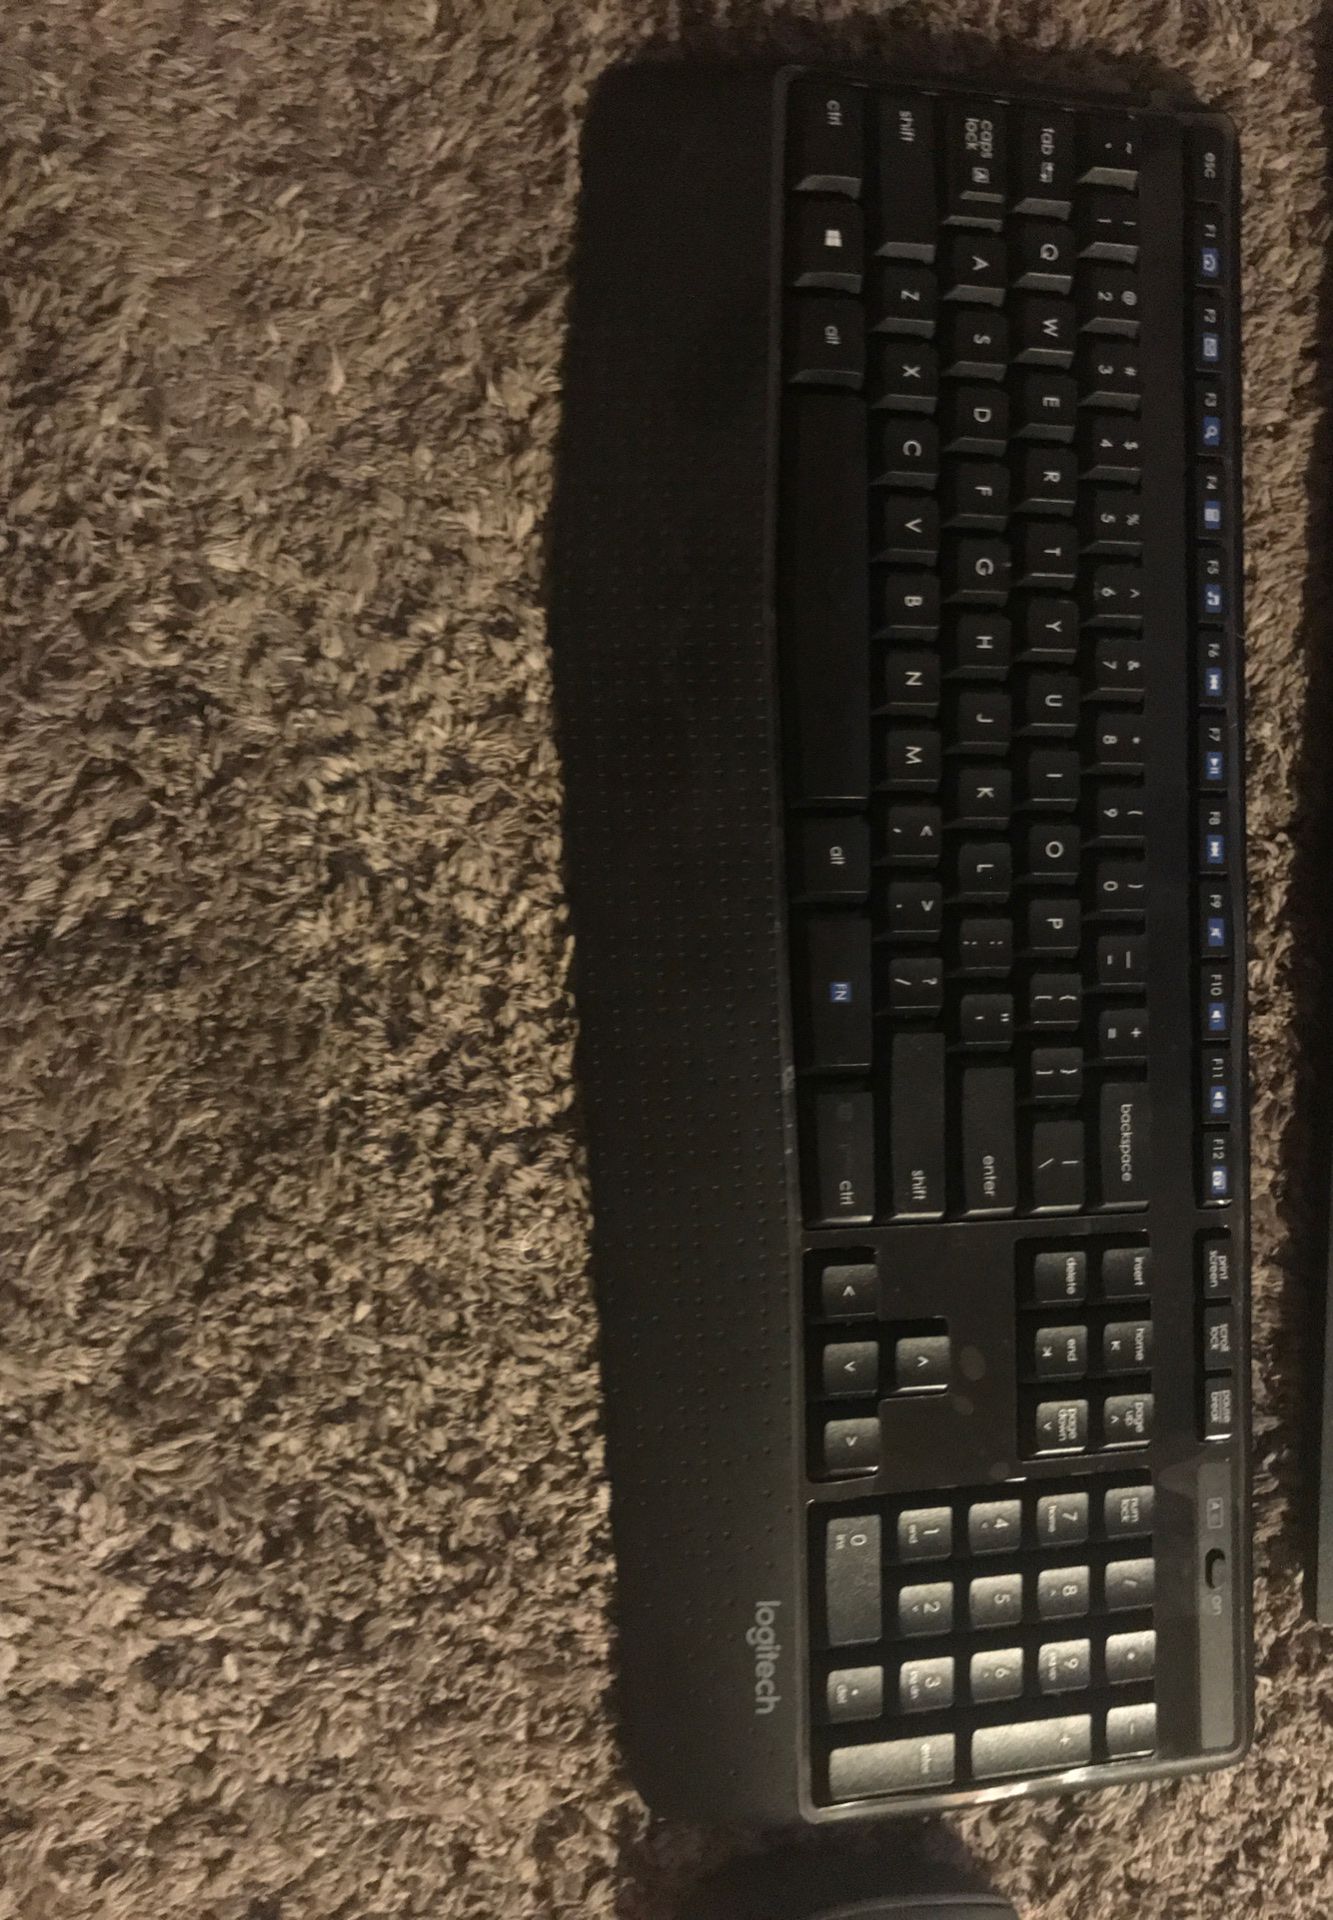 Brand new Logitech Wireless Keyboard and Mouse Combo